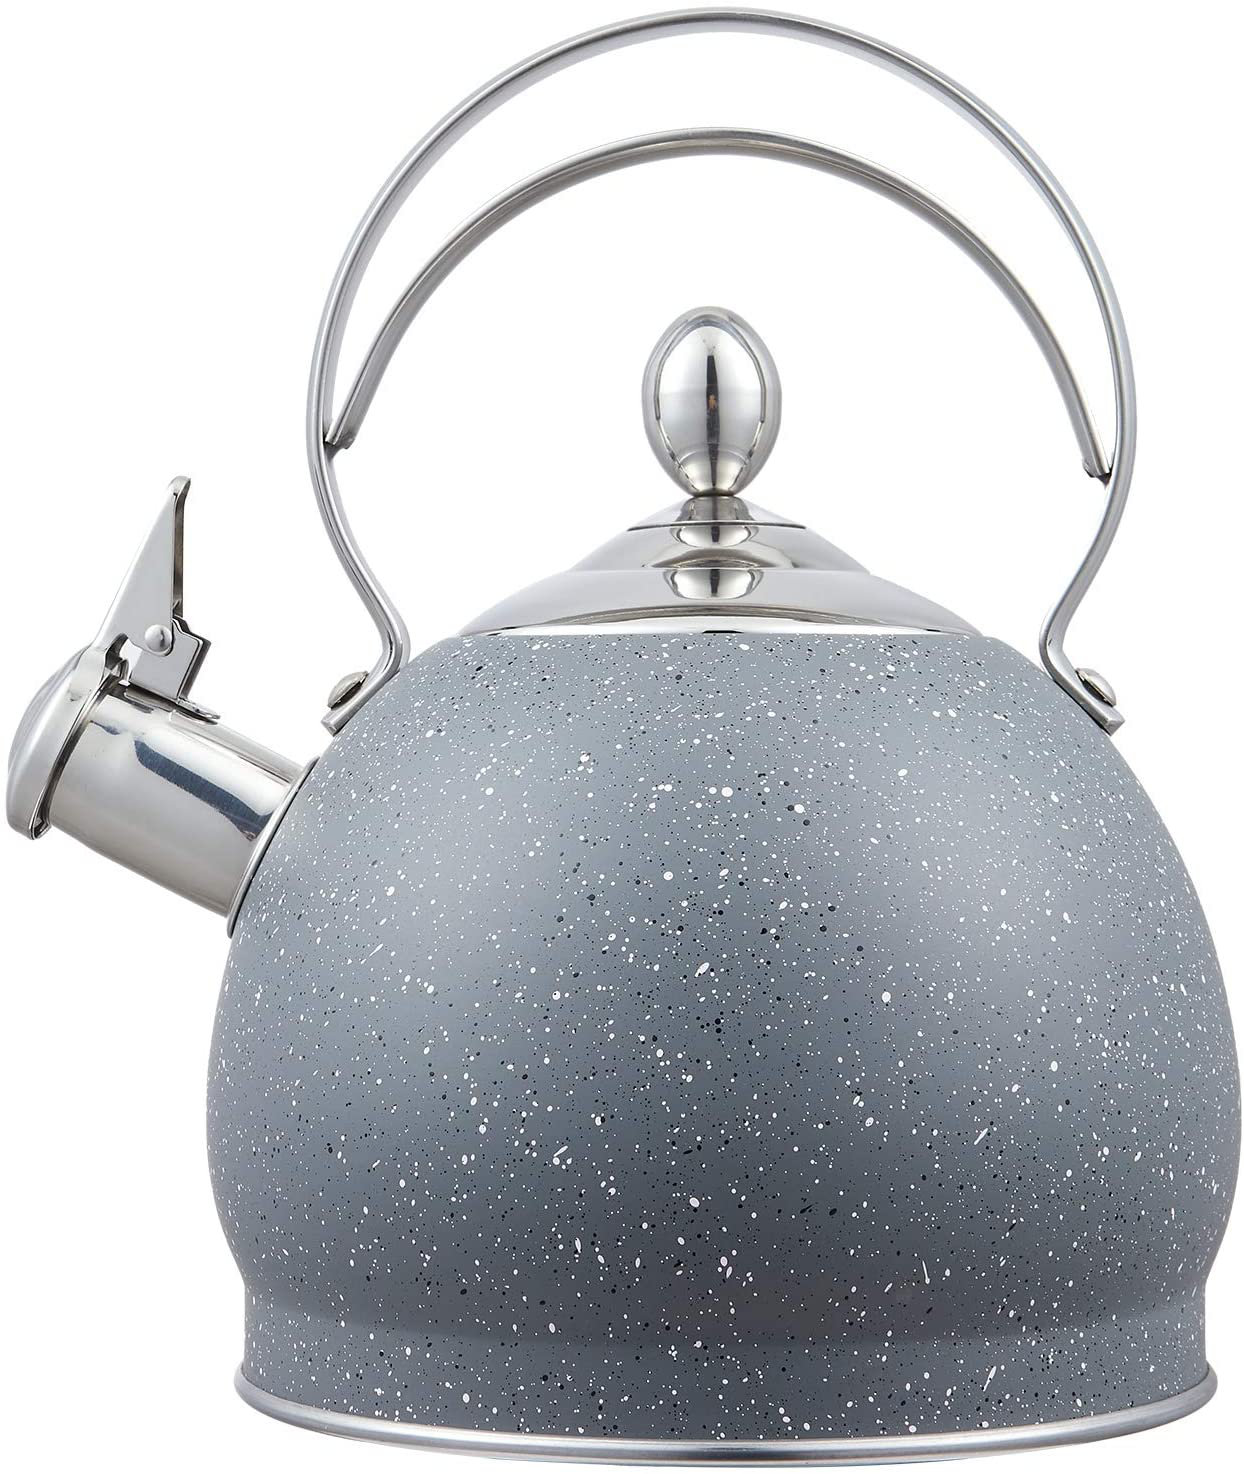 Whistling Stainless Steel Tea Pot 2.6 Quart / 2.5 L Tea Kettle for Stove Top